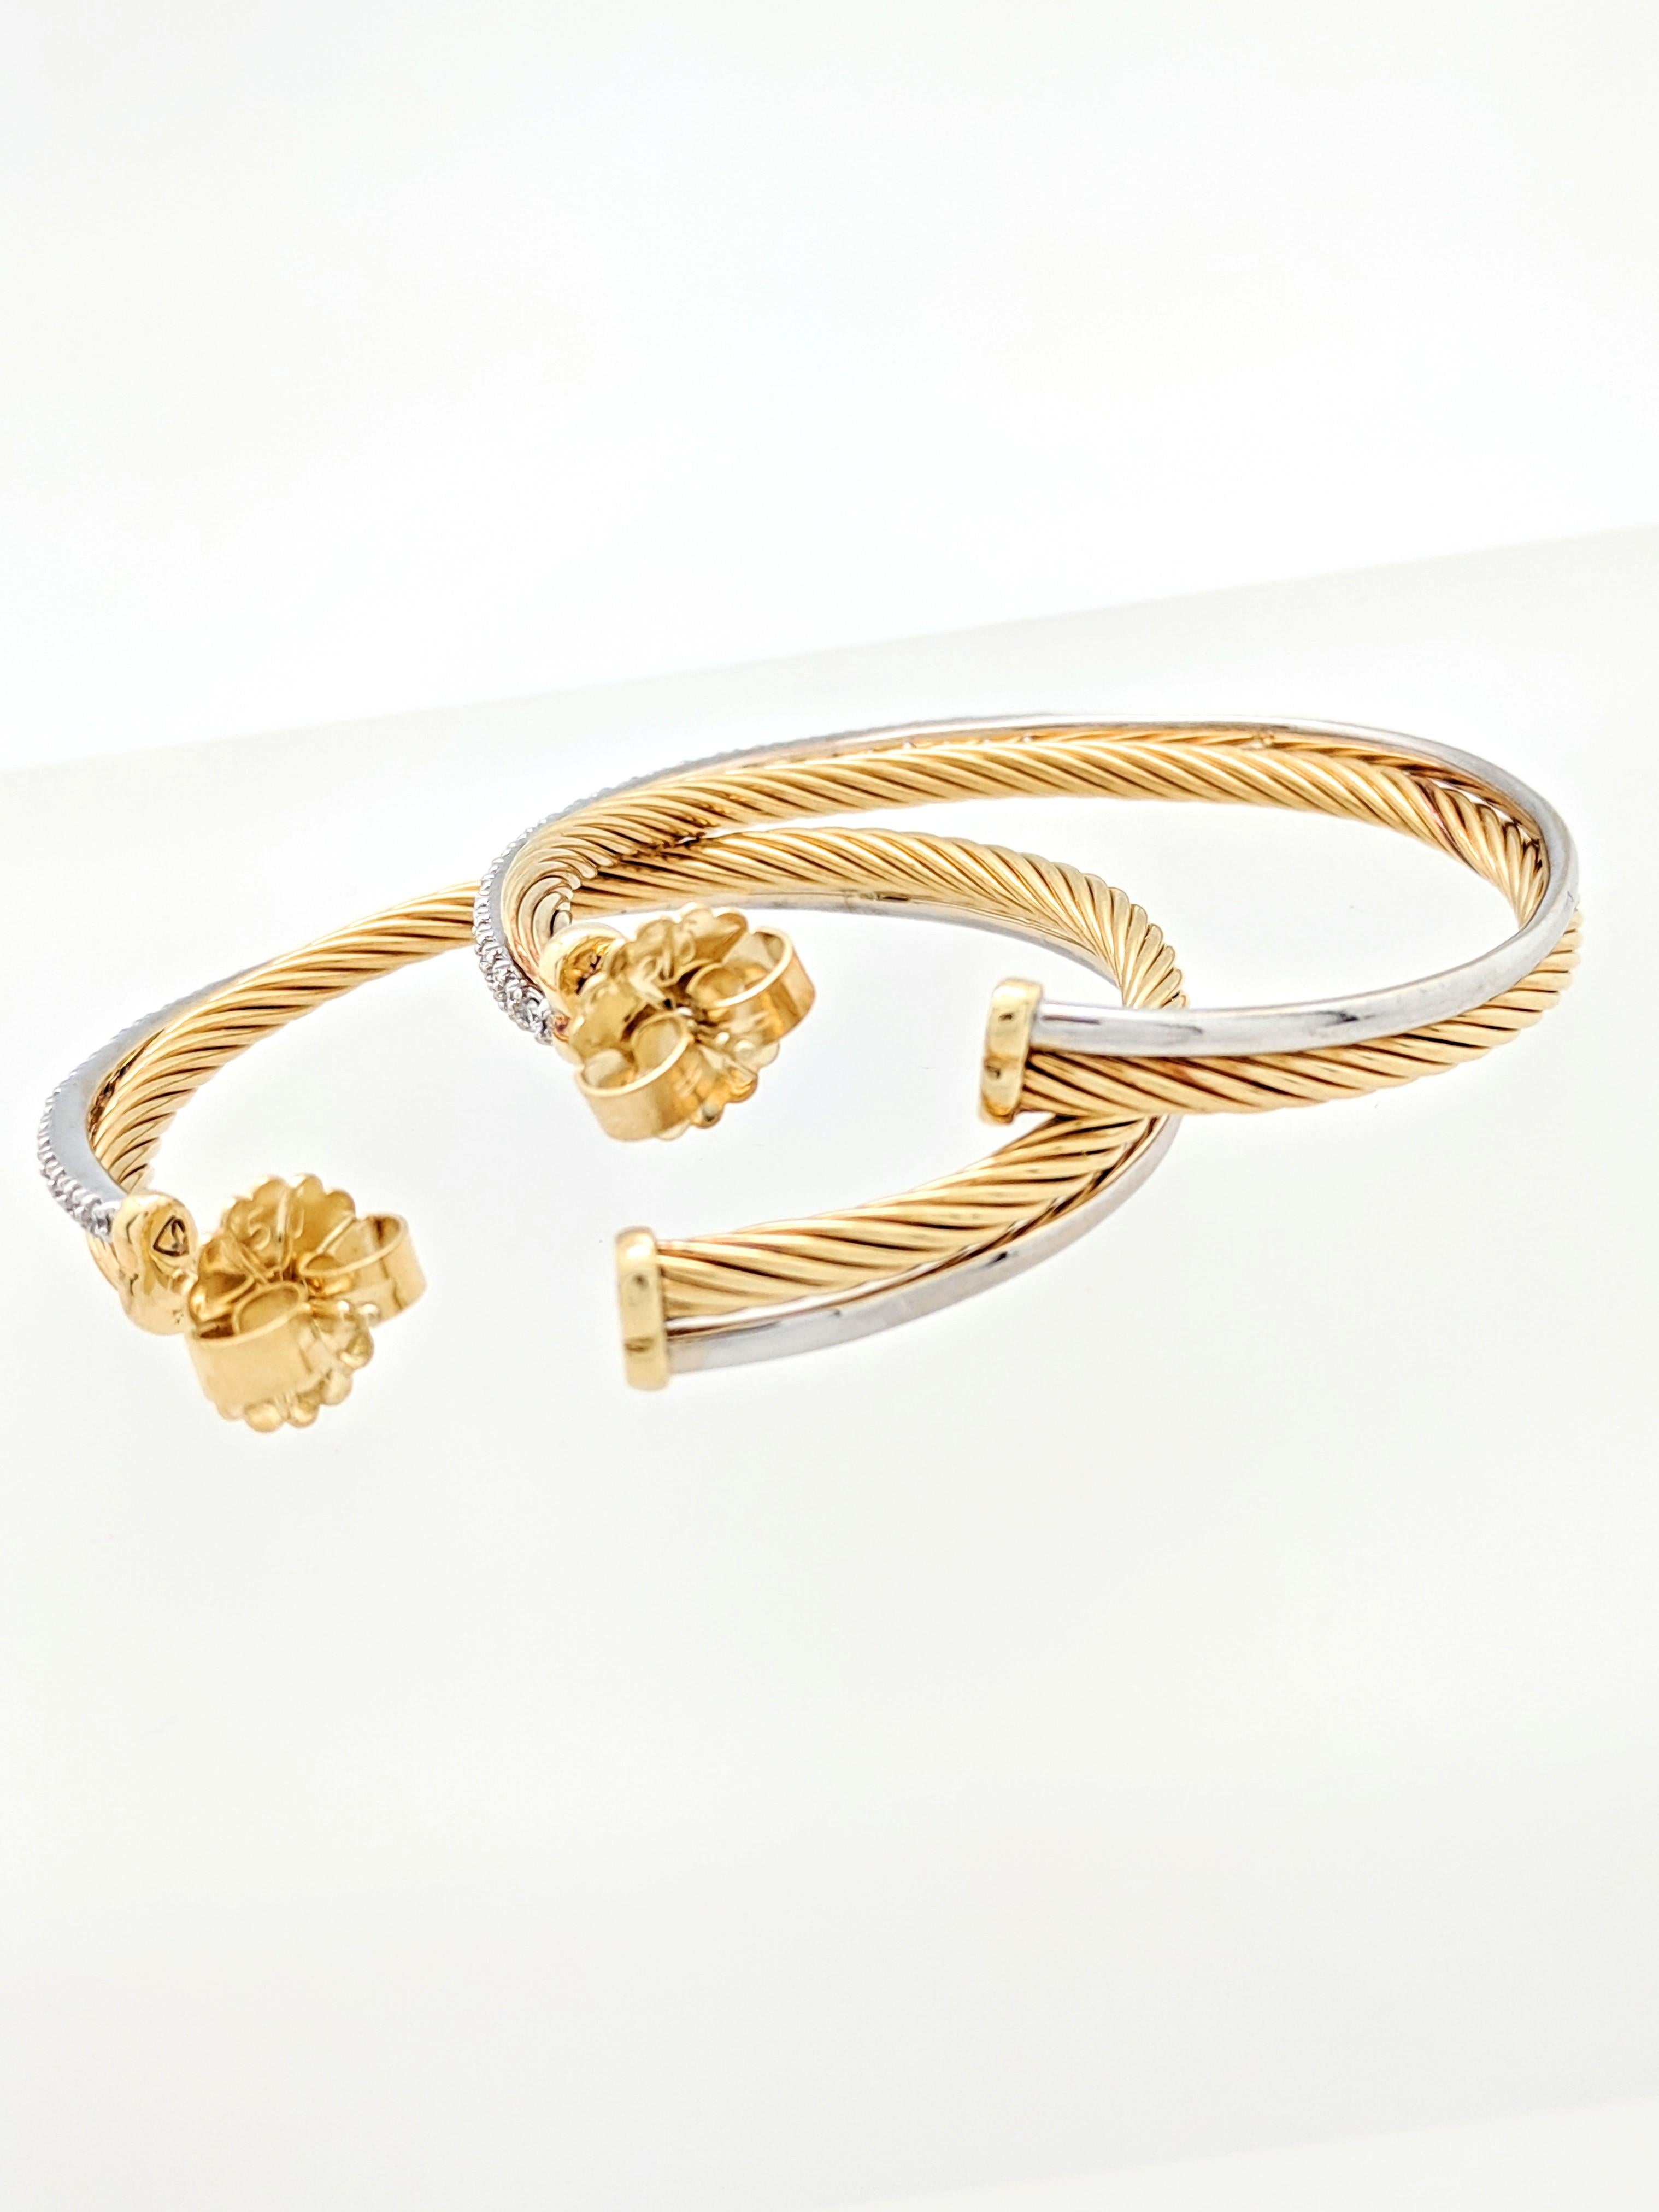 David Yurman Crossover Extra Large Hoop Earrings w/ Diamonds in 18k 2-Tone Gold 1